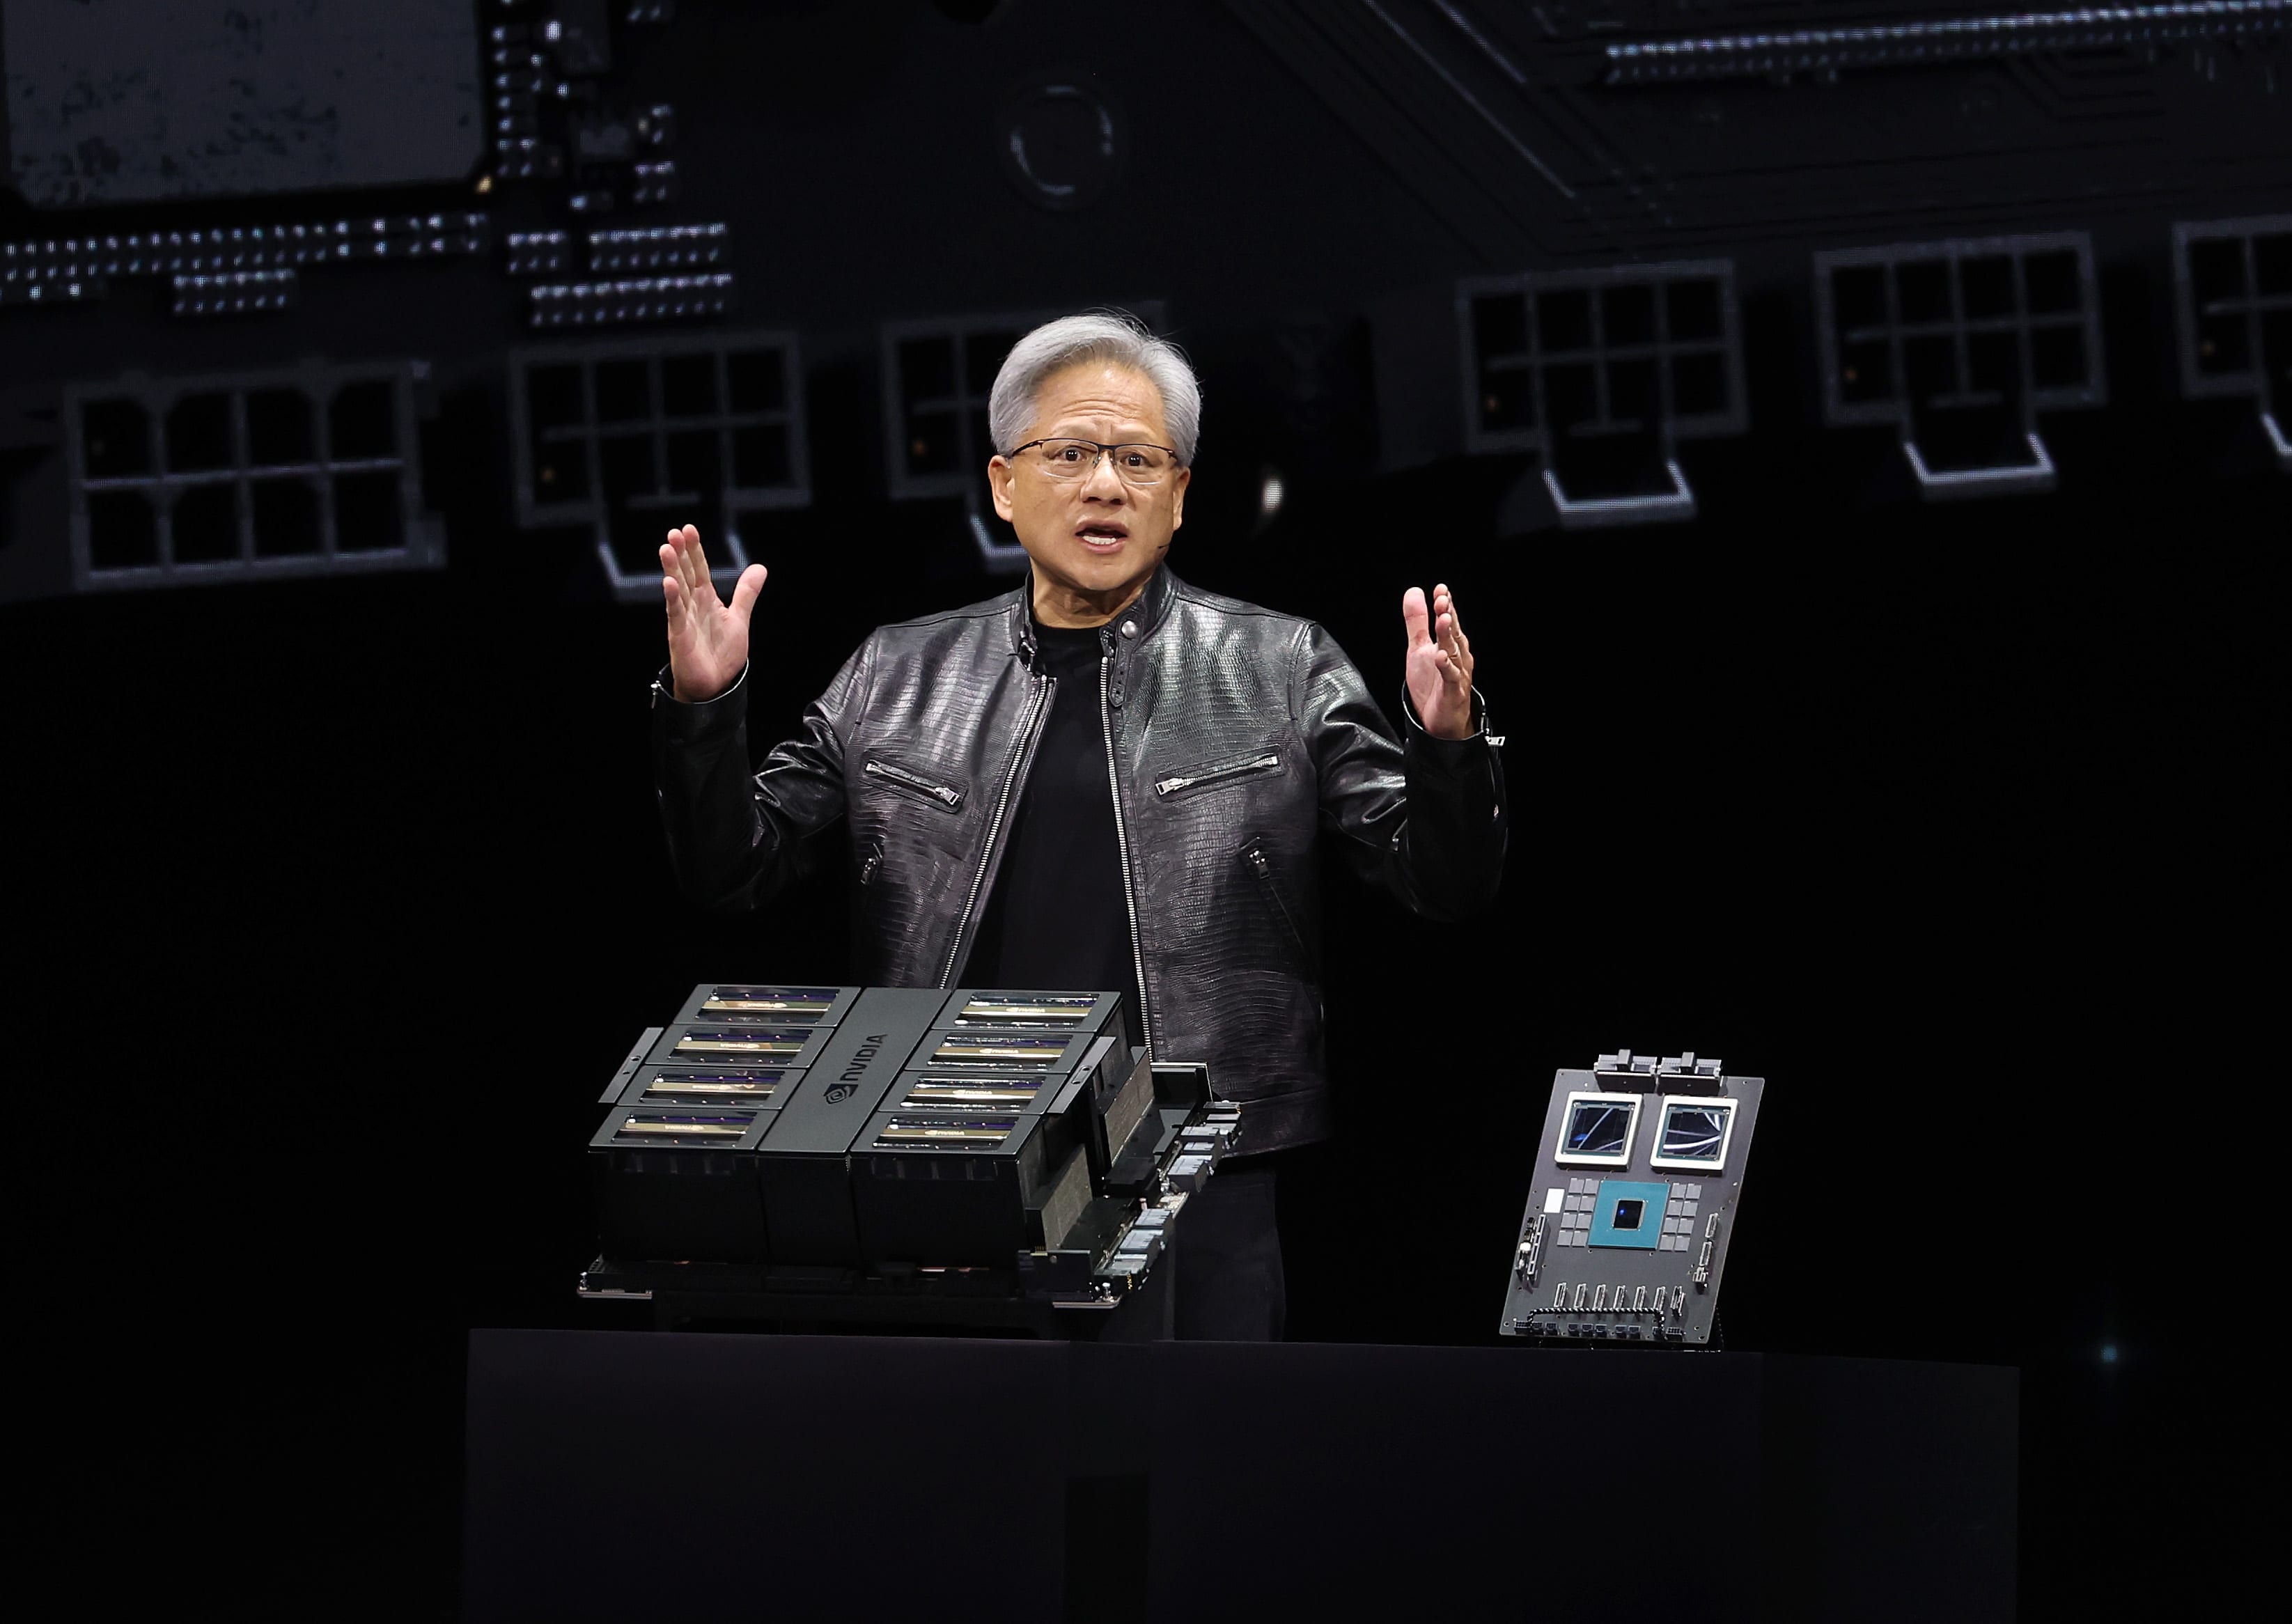 Nvidia kondigt de GB200 Blackwell AI-chip aan, die later dit jaar wordt gelanceerd